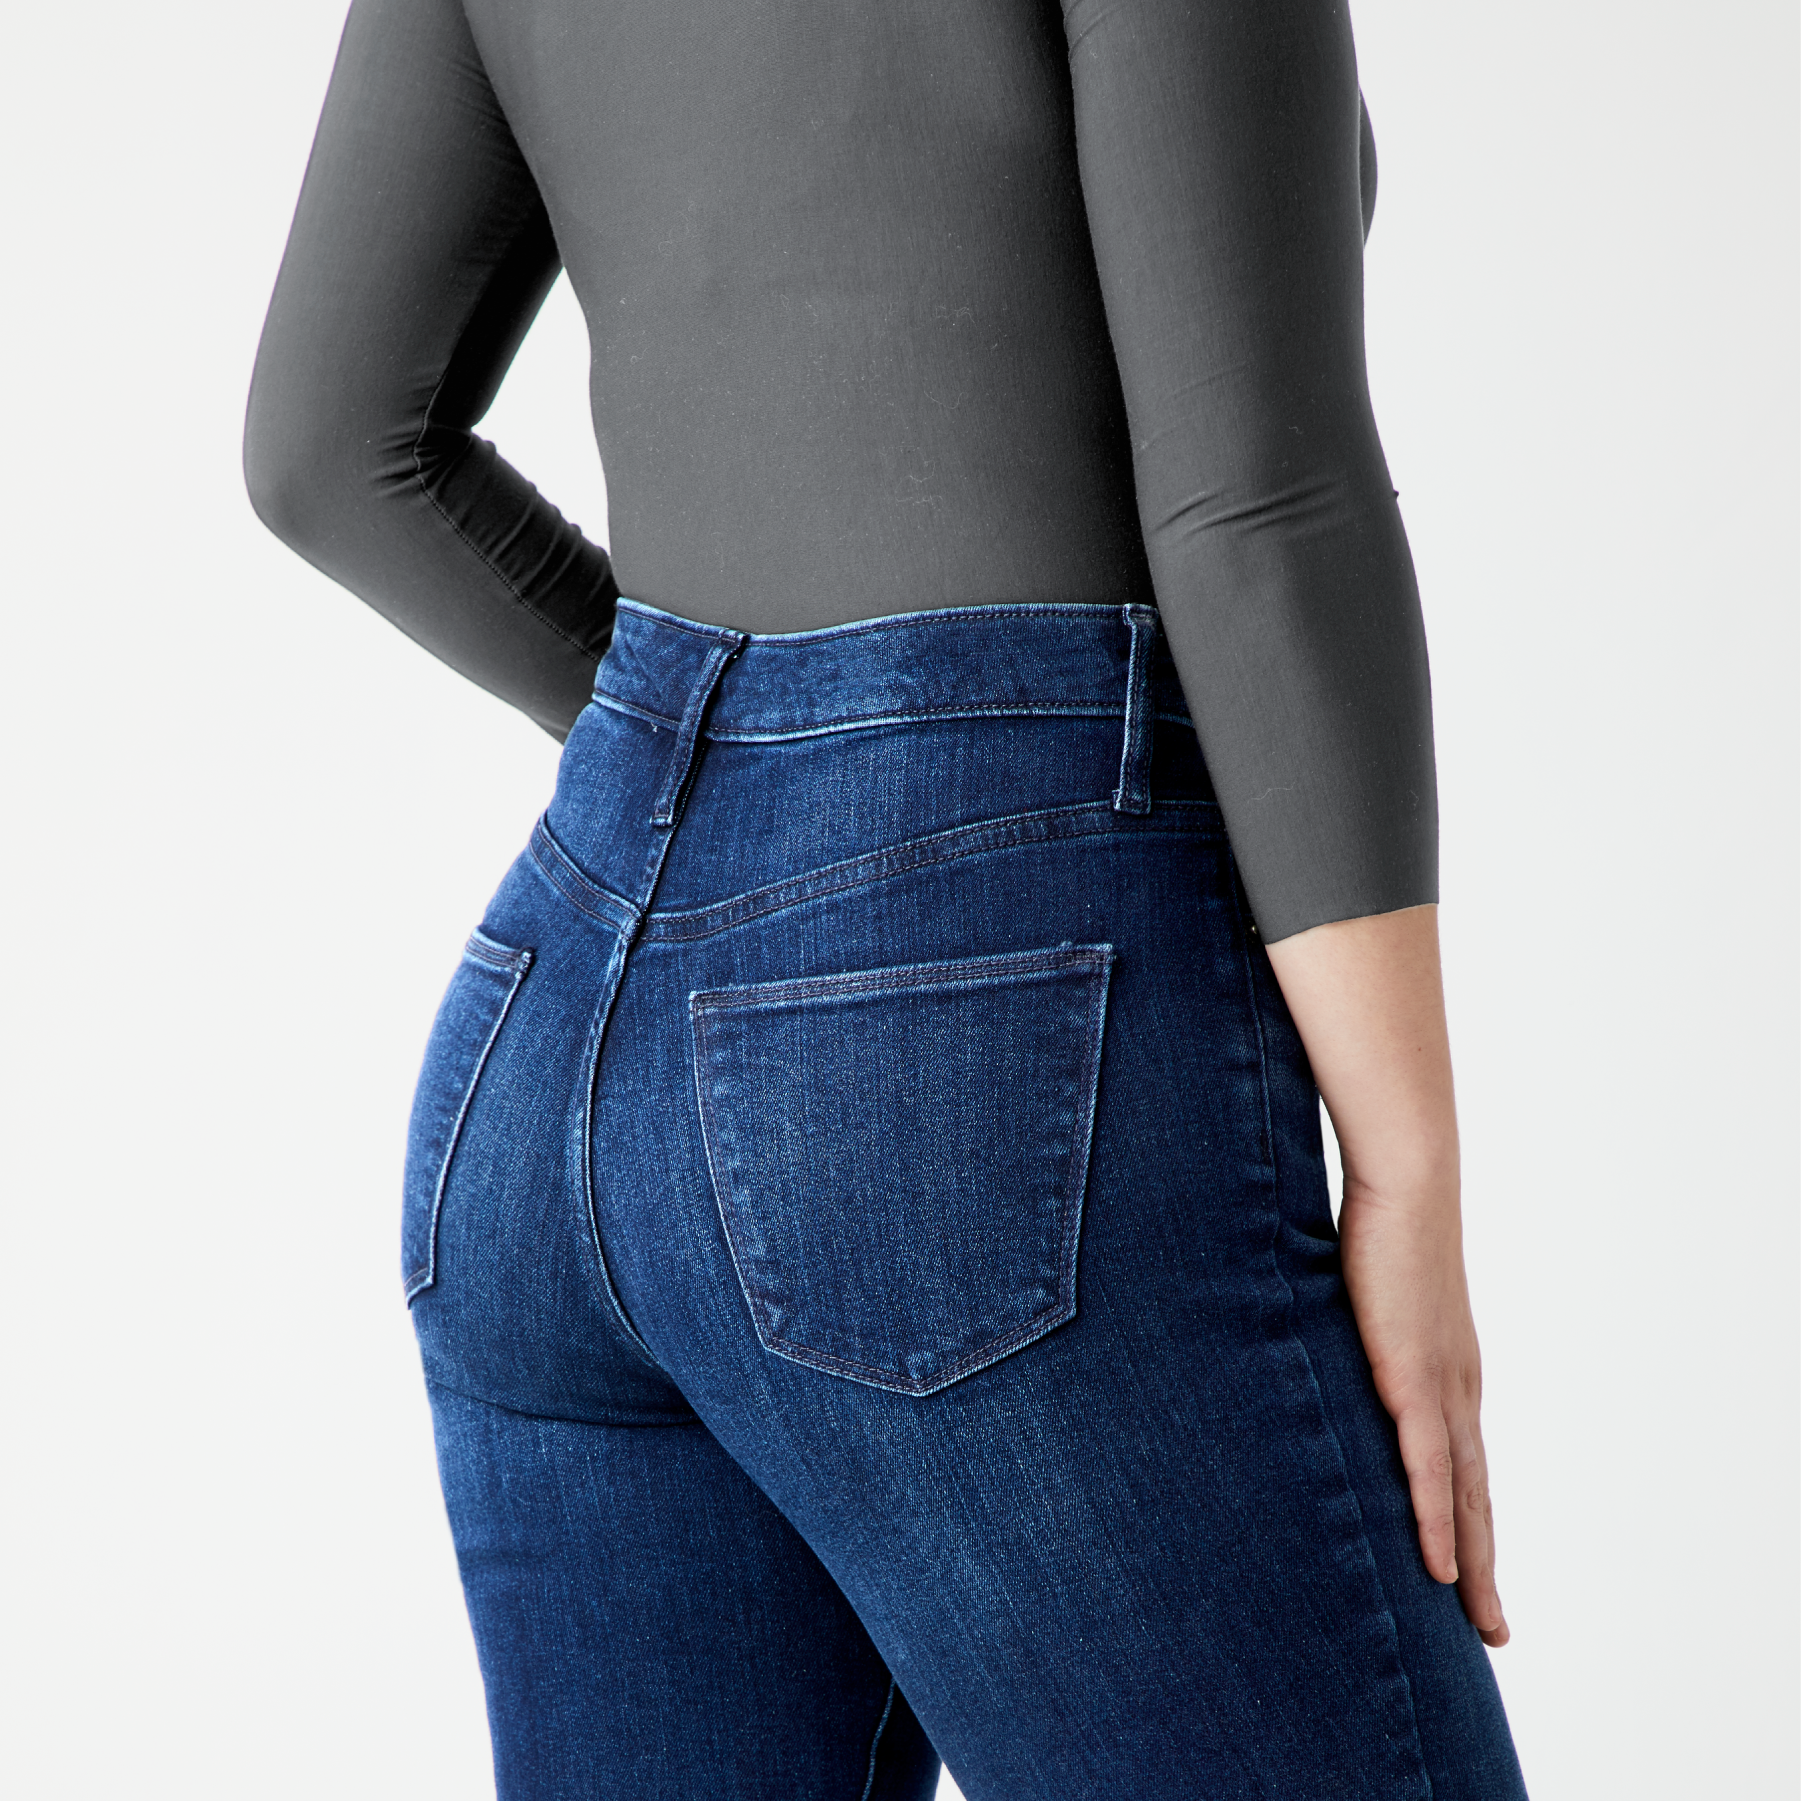 best fitting jeans for flat bottom